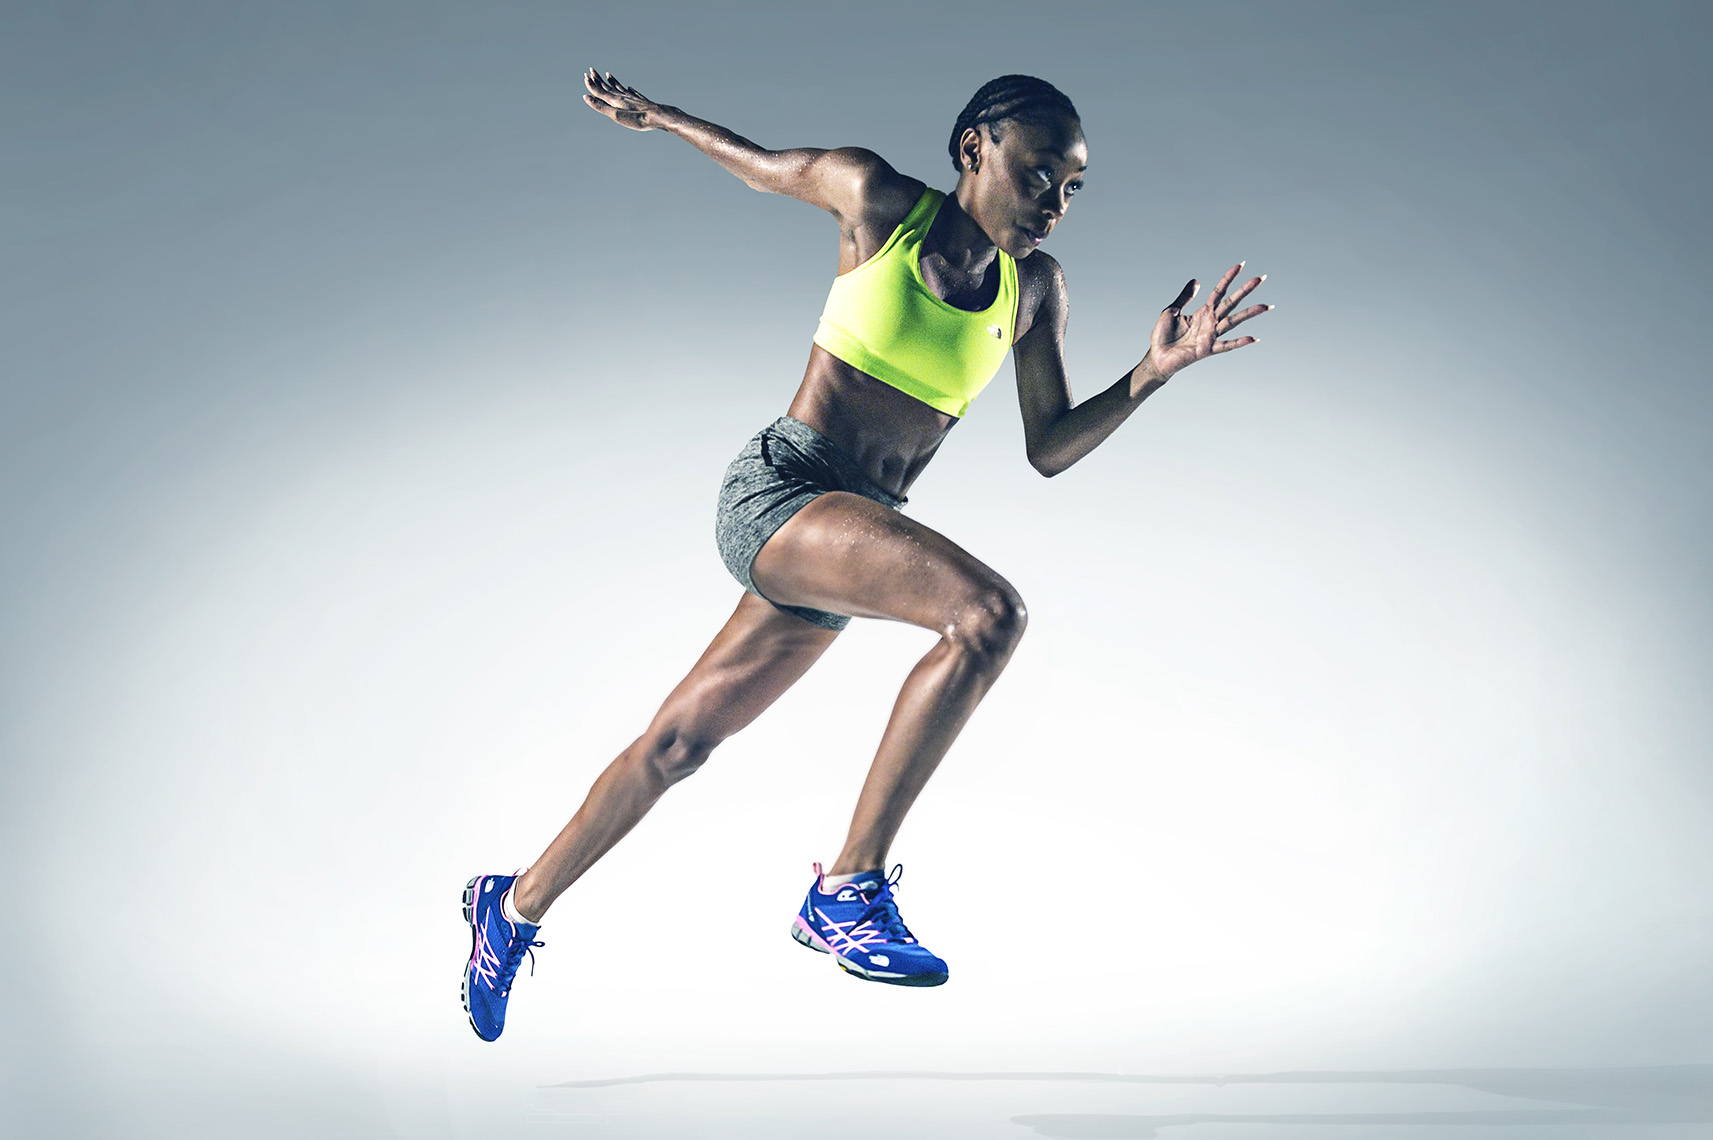 Kevin Steele - Studio portrait of an athlete sprinting